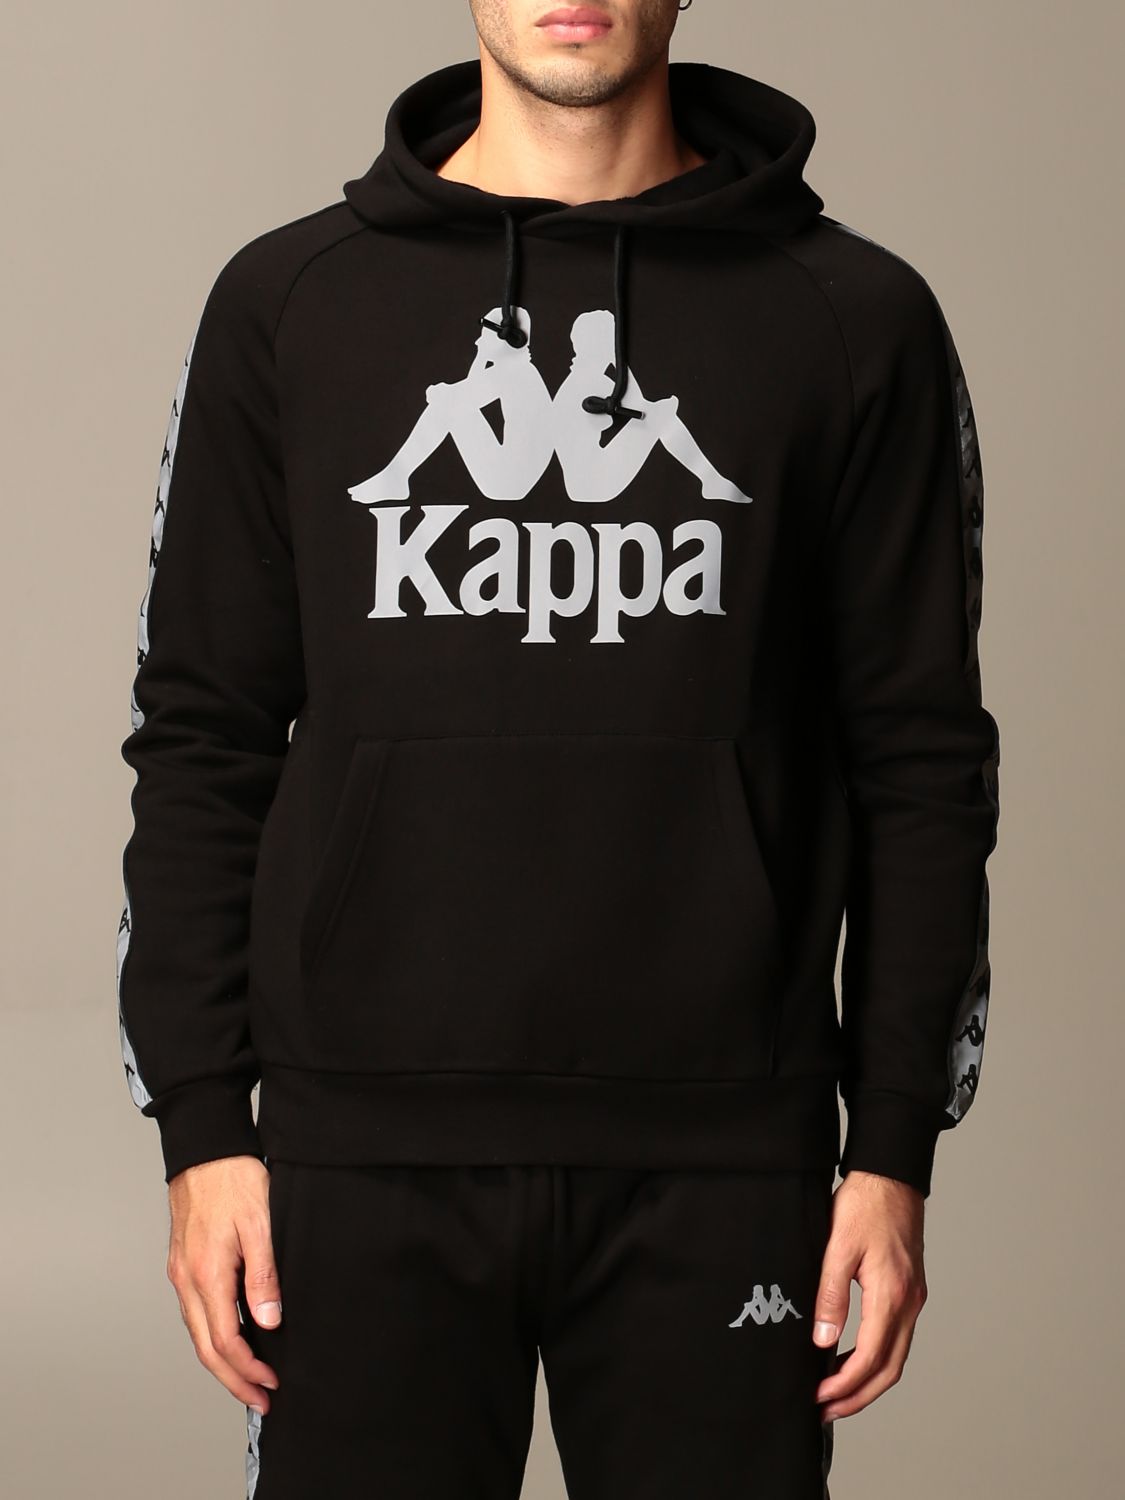 presse Lao Scan Kappa Outlet: sweatshirt with logo and hood - Black | Kappa sweatshirt  3116NXW online at GIGLIO.COM